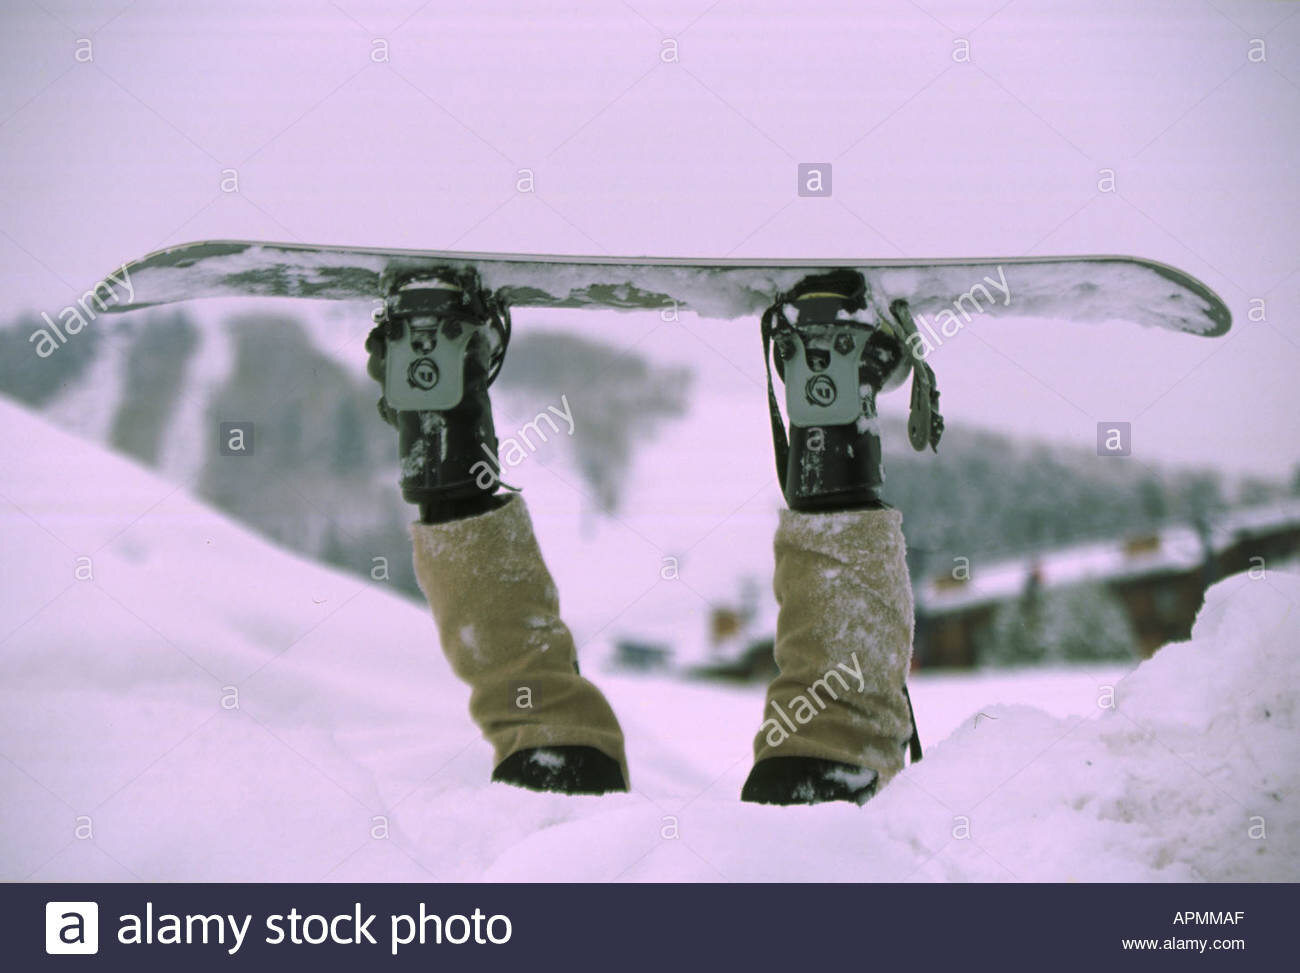 snowboarding-wipeout-APMMAF.jpg